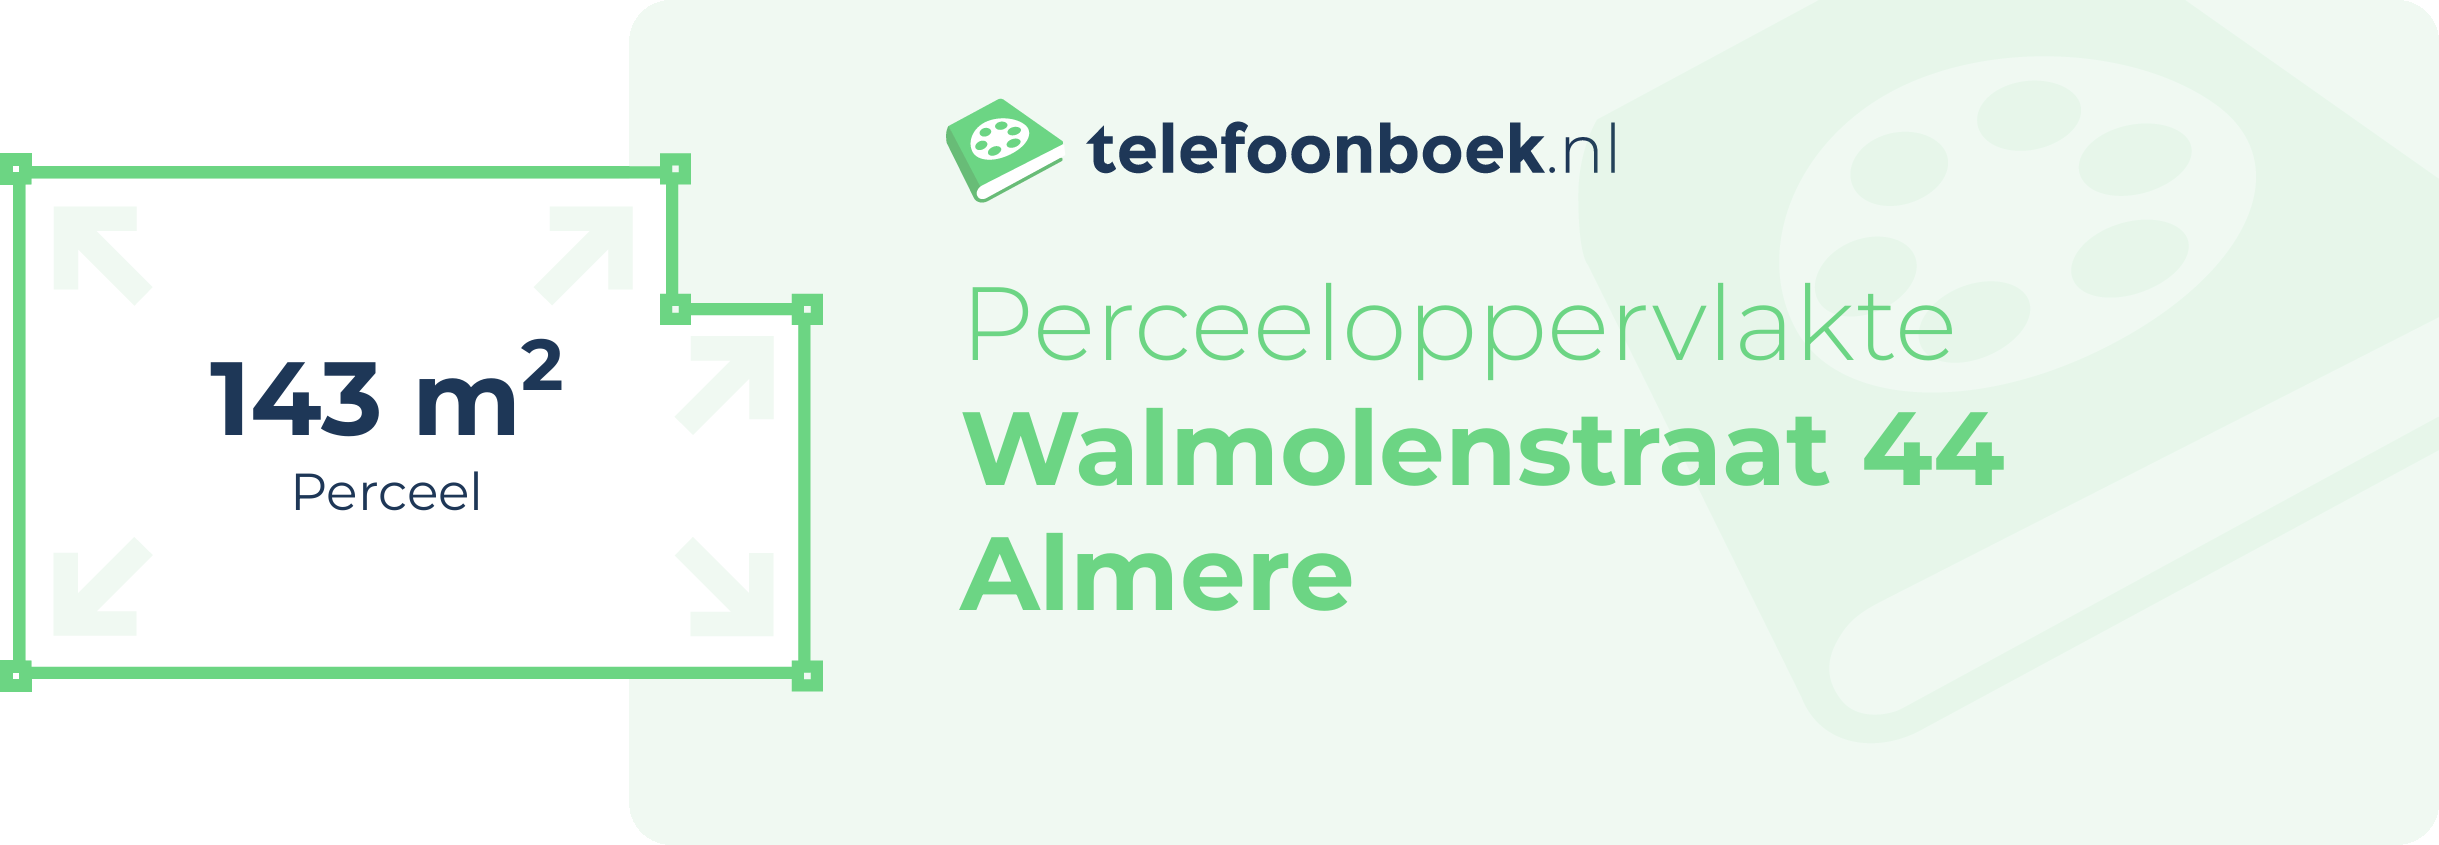 Perceeloppervlakte Walmolenstraat 44 Almere